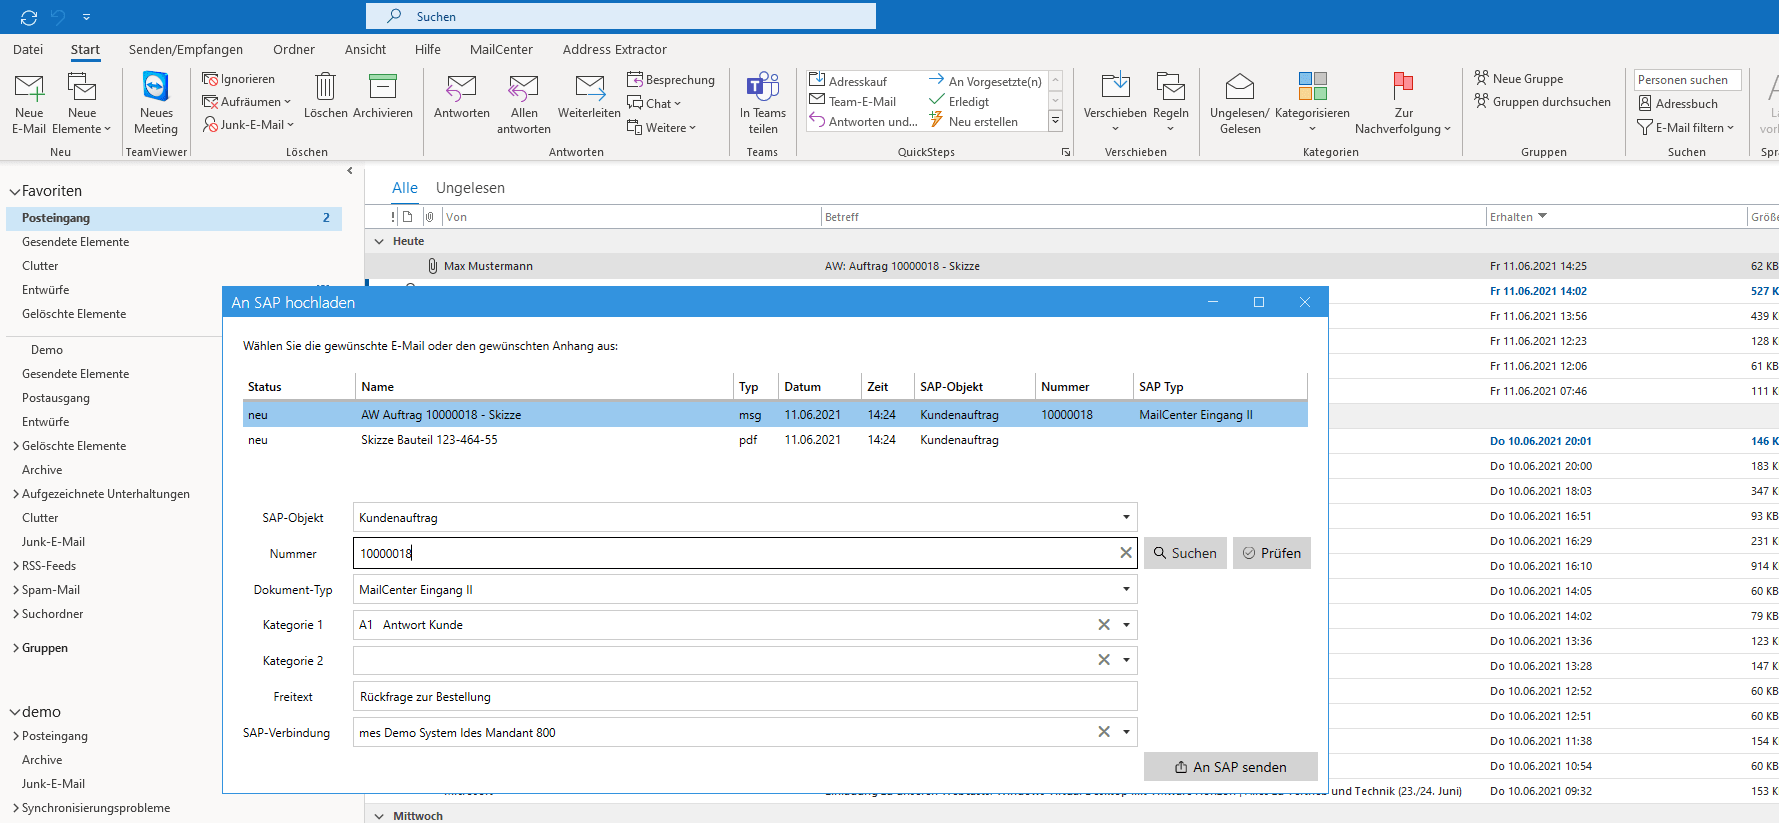 SAP Outlook Screenshot from Microsoft Office